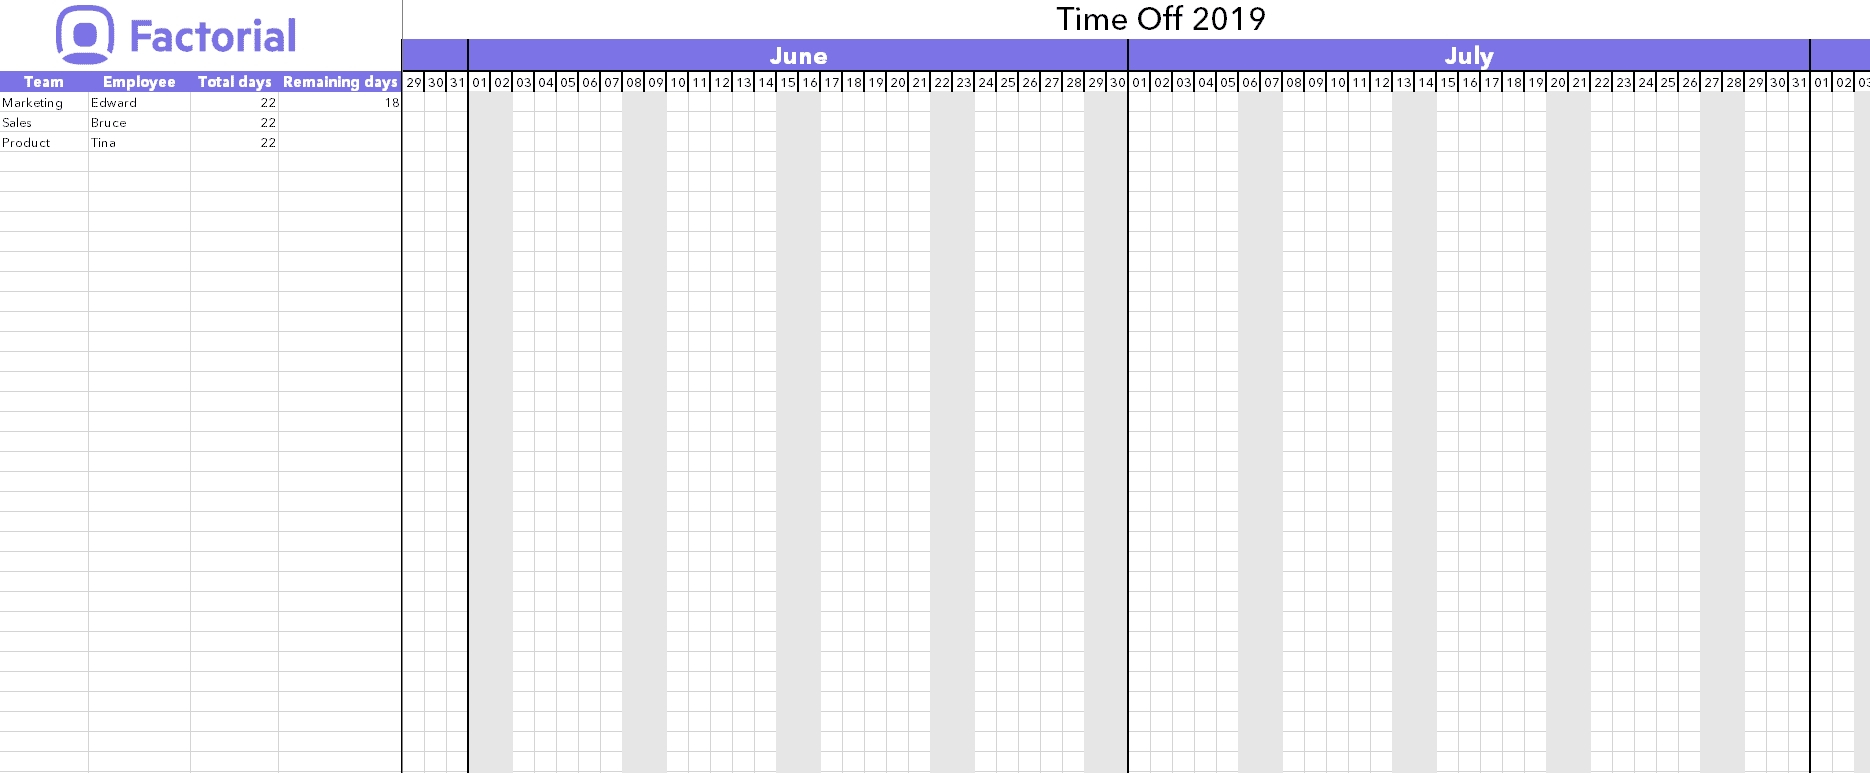 Time Off Calendar Excel | Calendar Template 2020 regarding Team Holiday Calendar